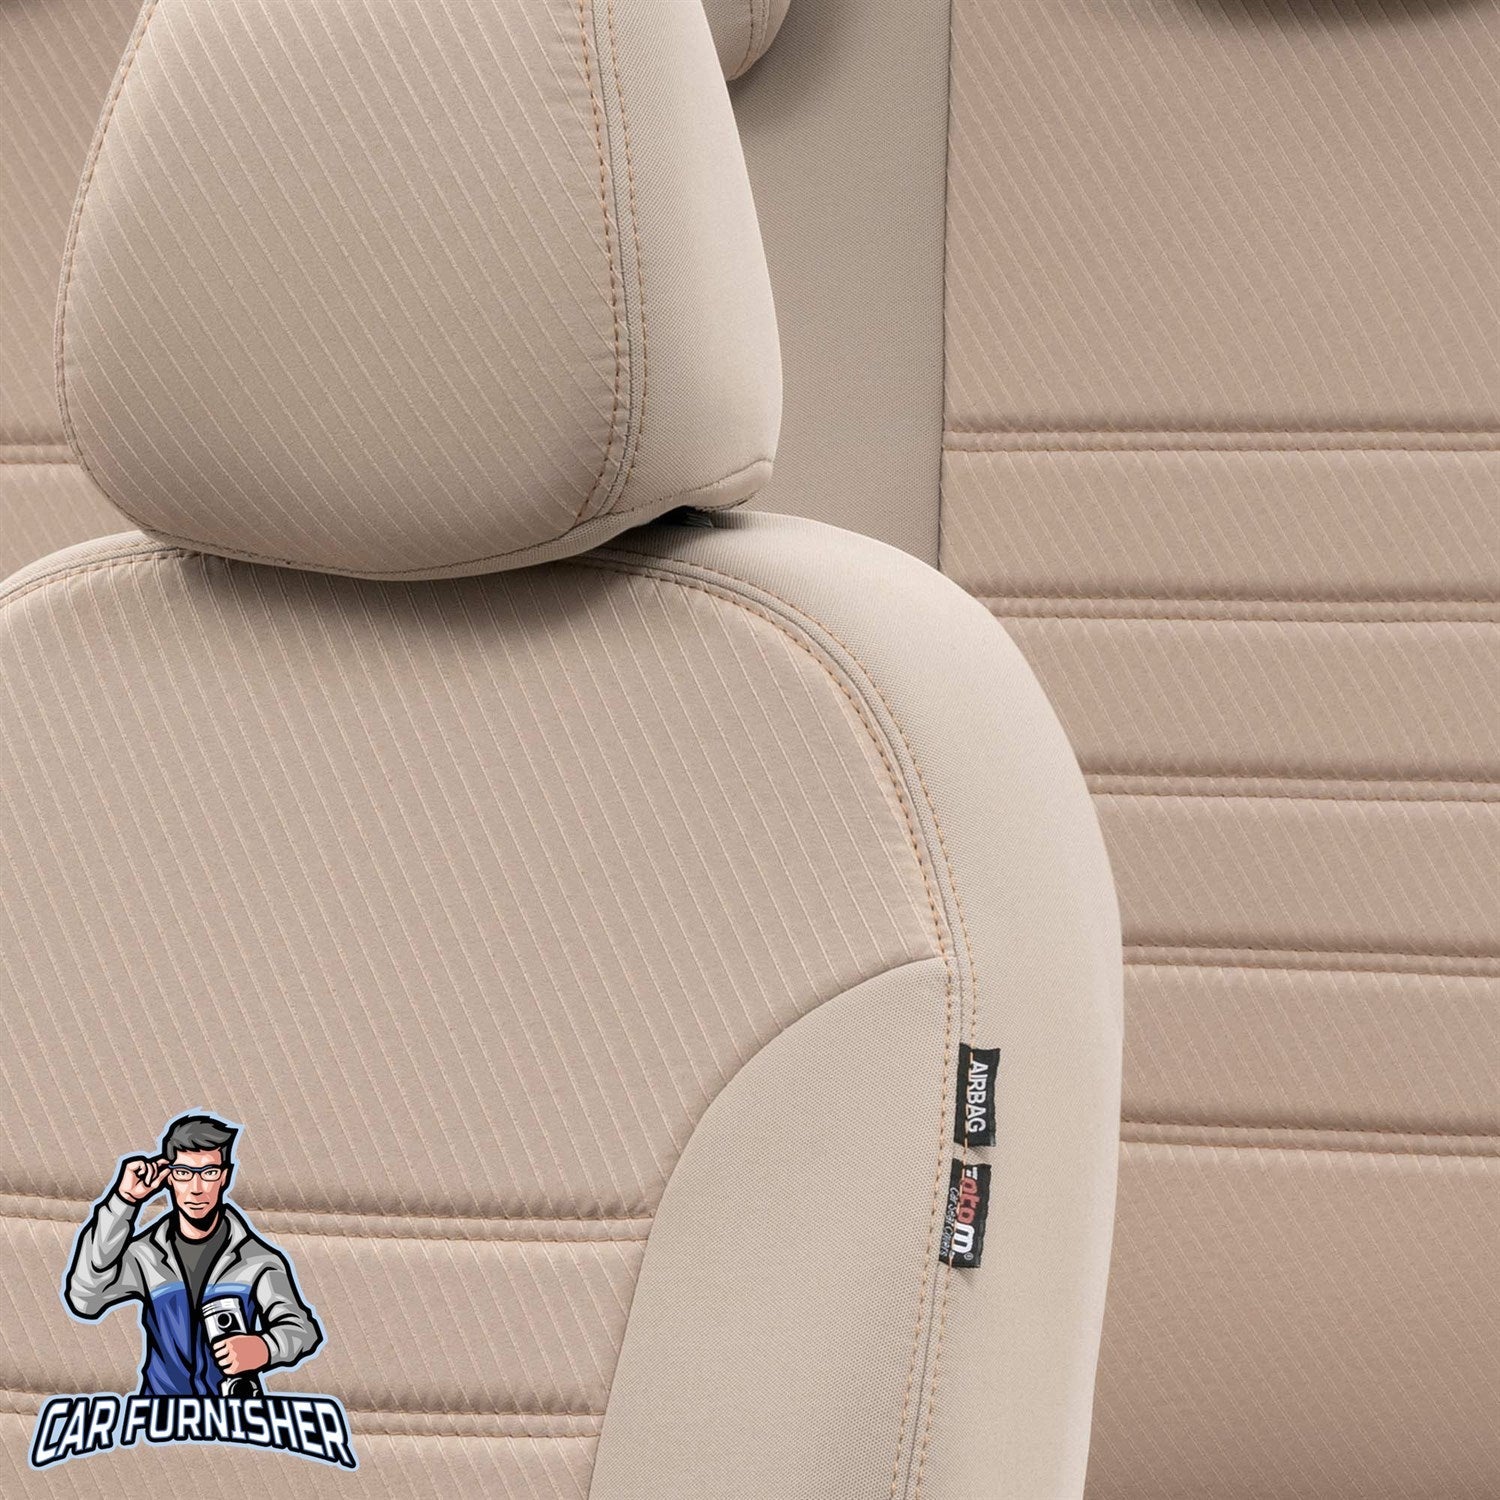 Tata Xenon Seat Covers Original Jacquard Design Dark Beige Jacquard Fabric